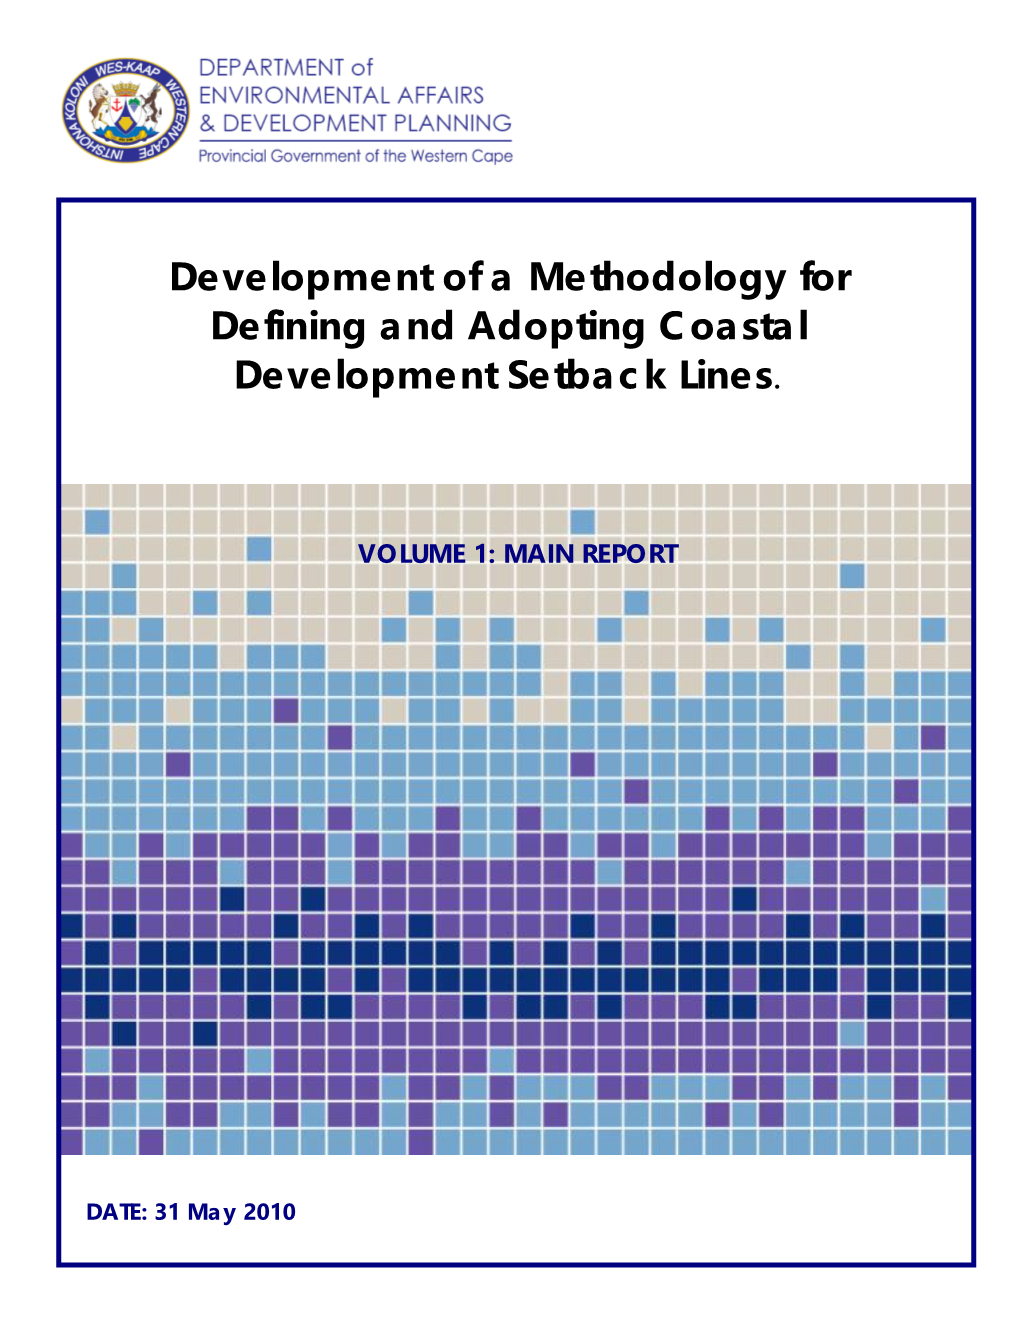 Development of a Methodology for Defining and Adopting Coastal Development Setback Lines: Milnerton Case Study (Error! Reference Source Not Found